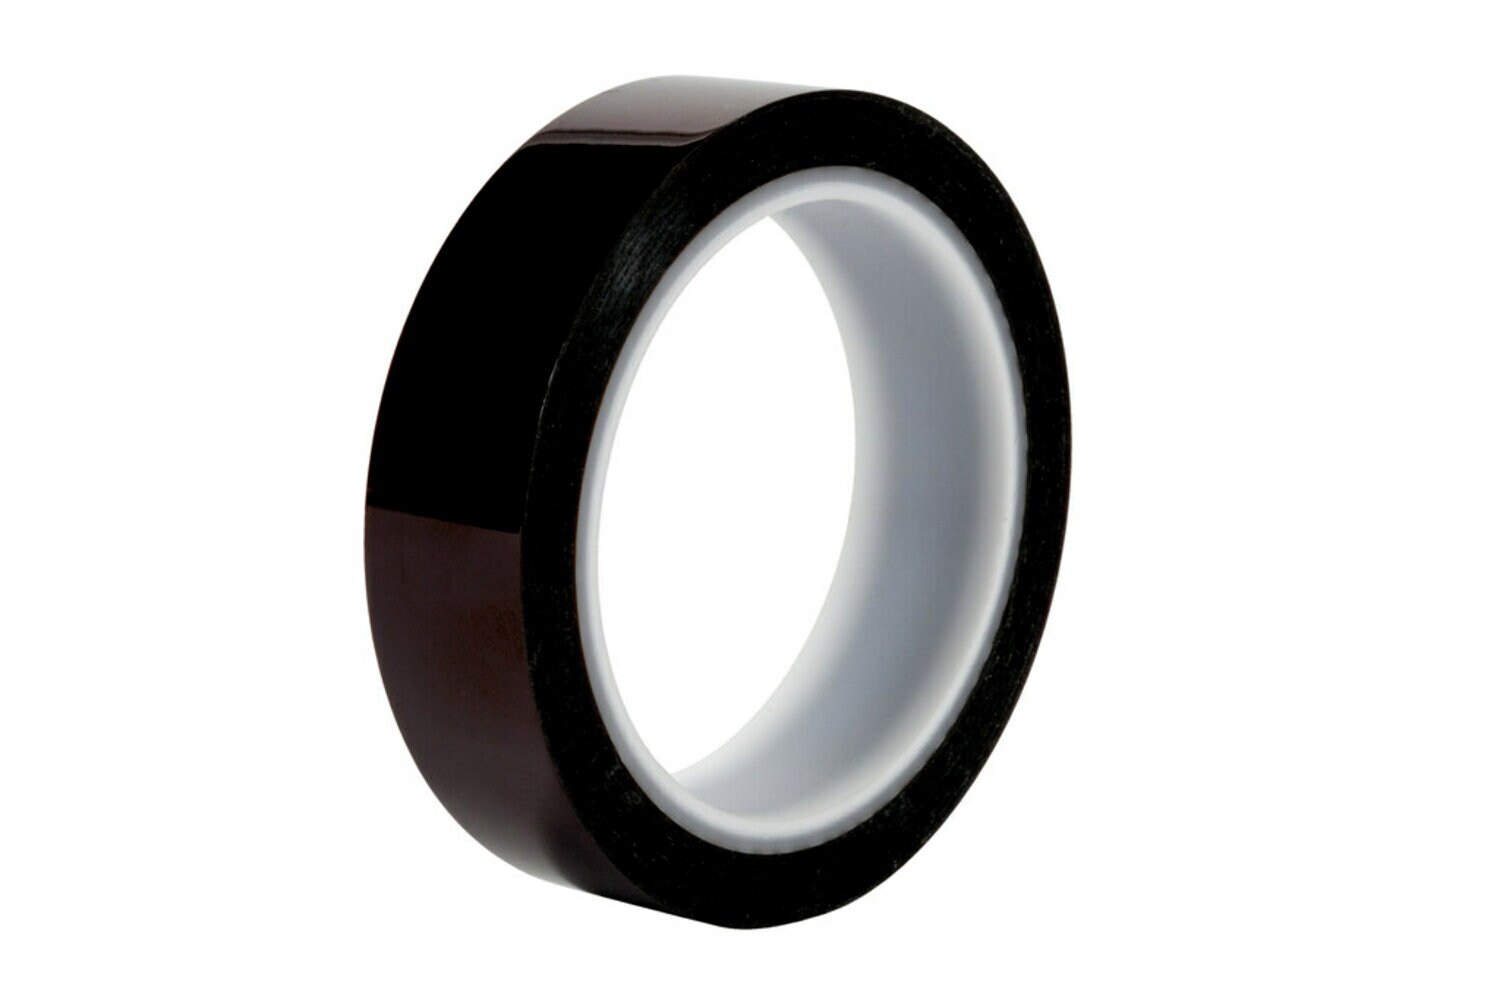 7100059598 - 3M Polyimide Tape 8998, Dark Dark Amber, 1 in x 36 yd, 3.3 mil, 36
rolls per case